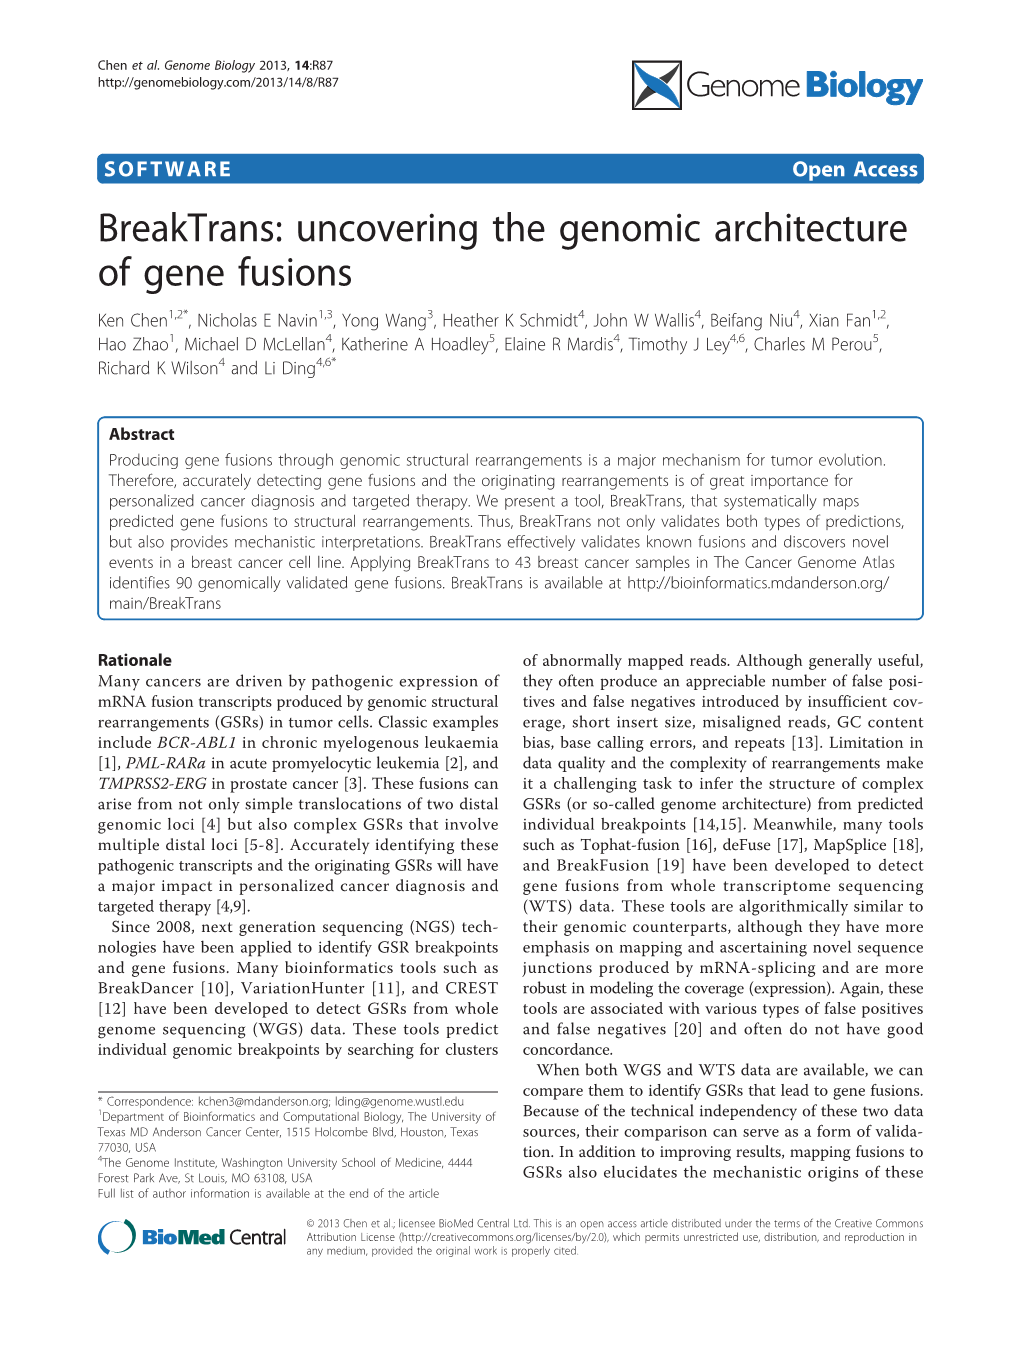 Breaktrans: Uncovering the Genomic Architecture of Gene Fusions